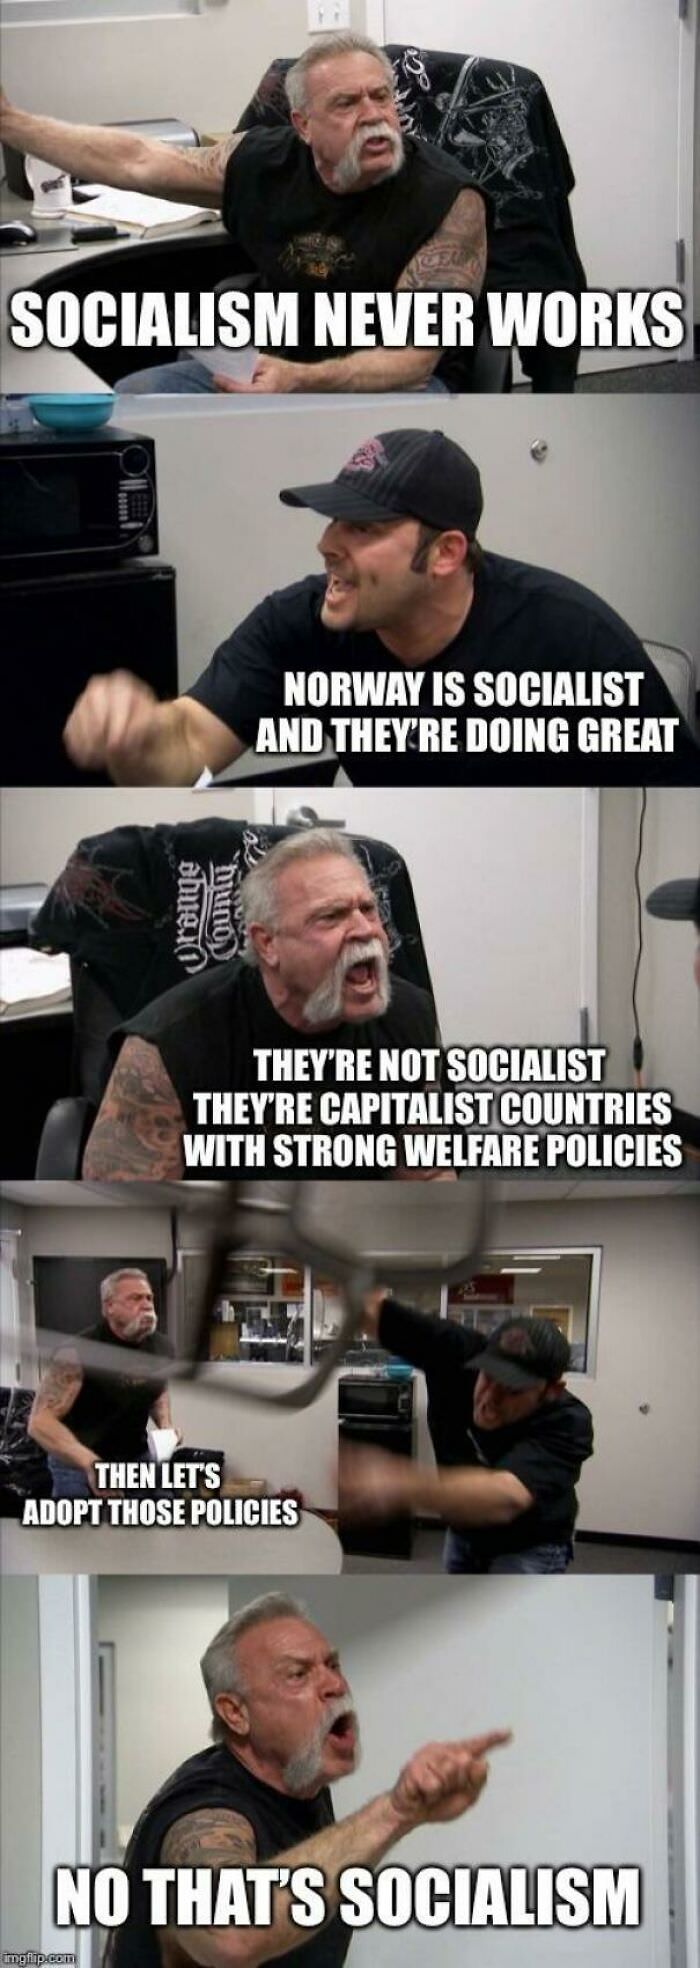 Socialism not socialism